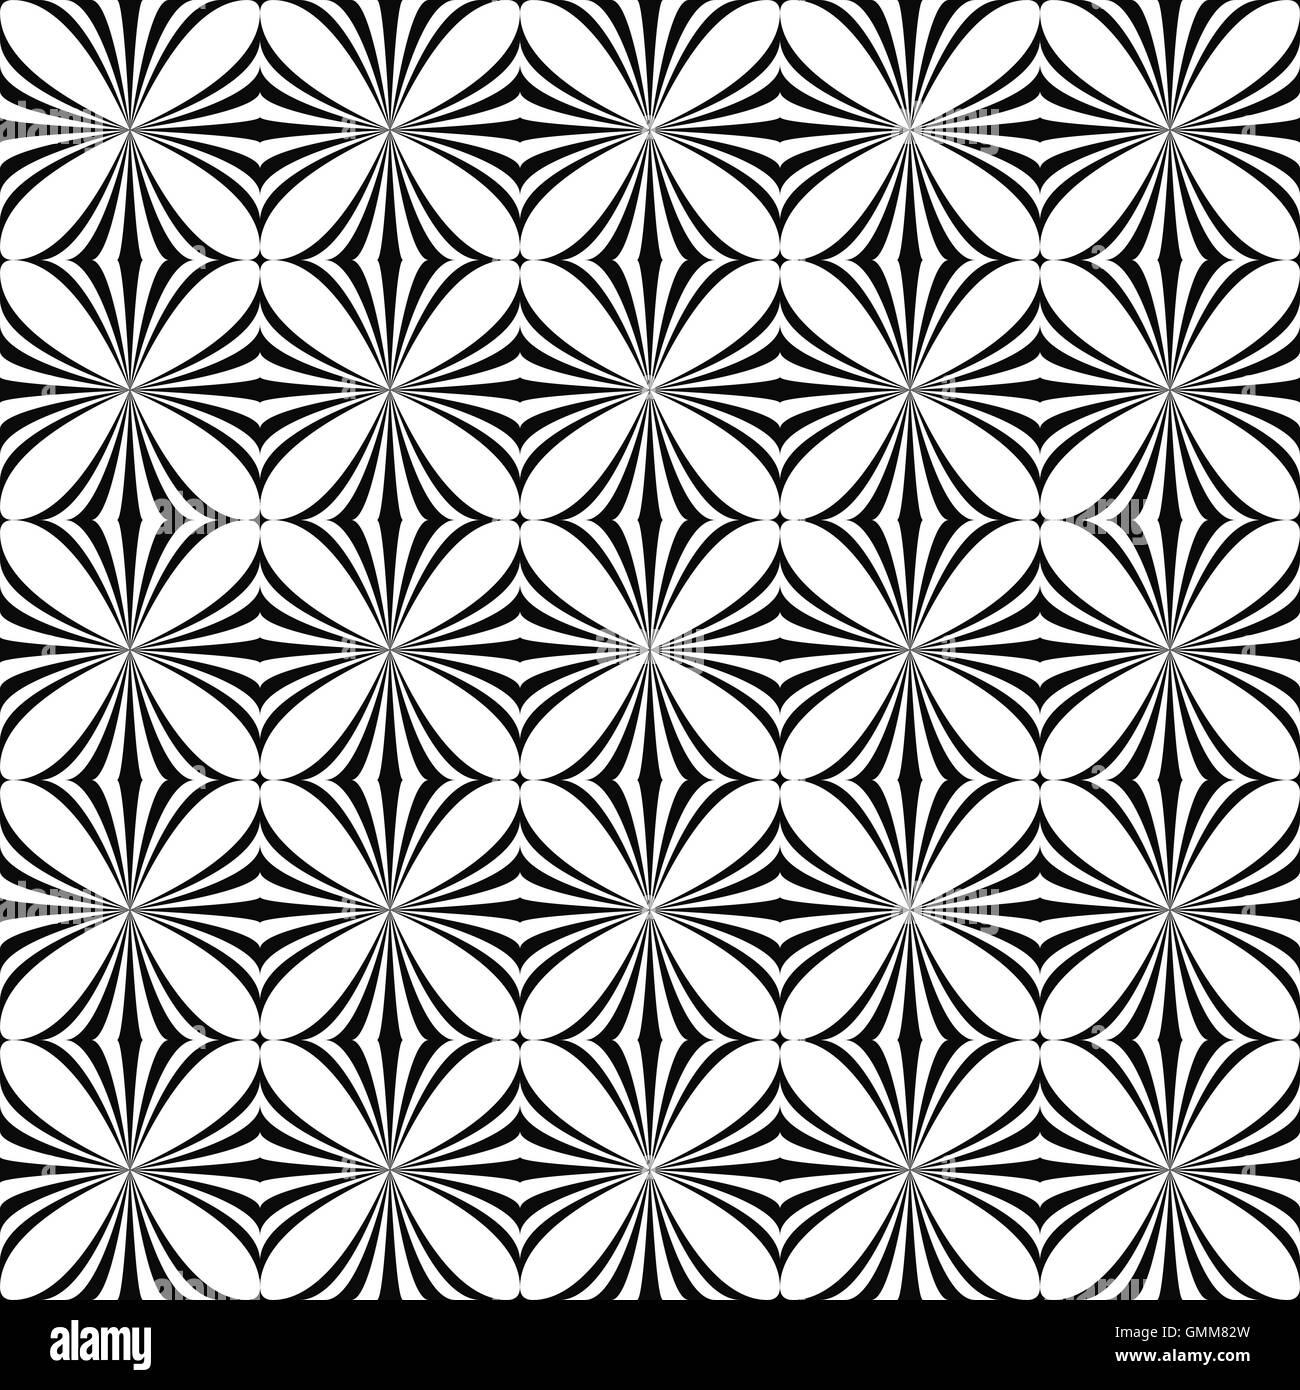 Monochrome gebogene Form Muster zu wiederholen Stock Vektor